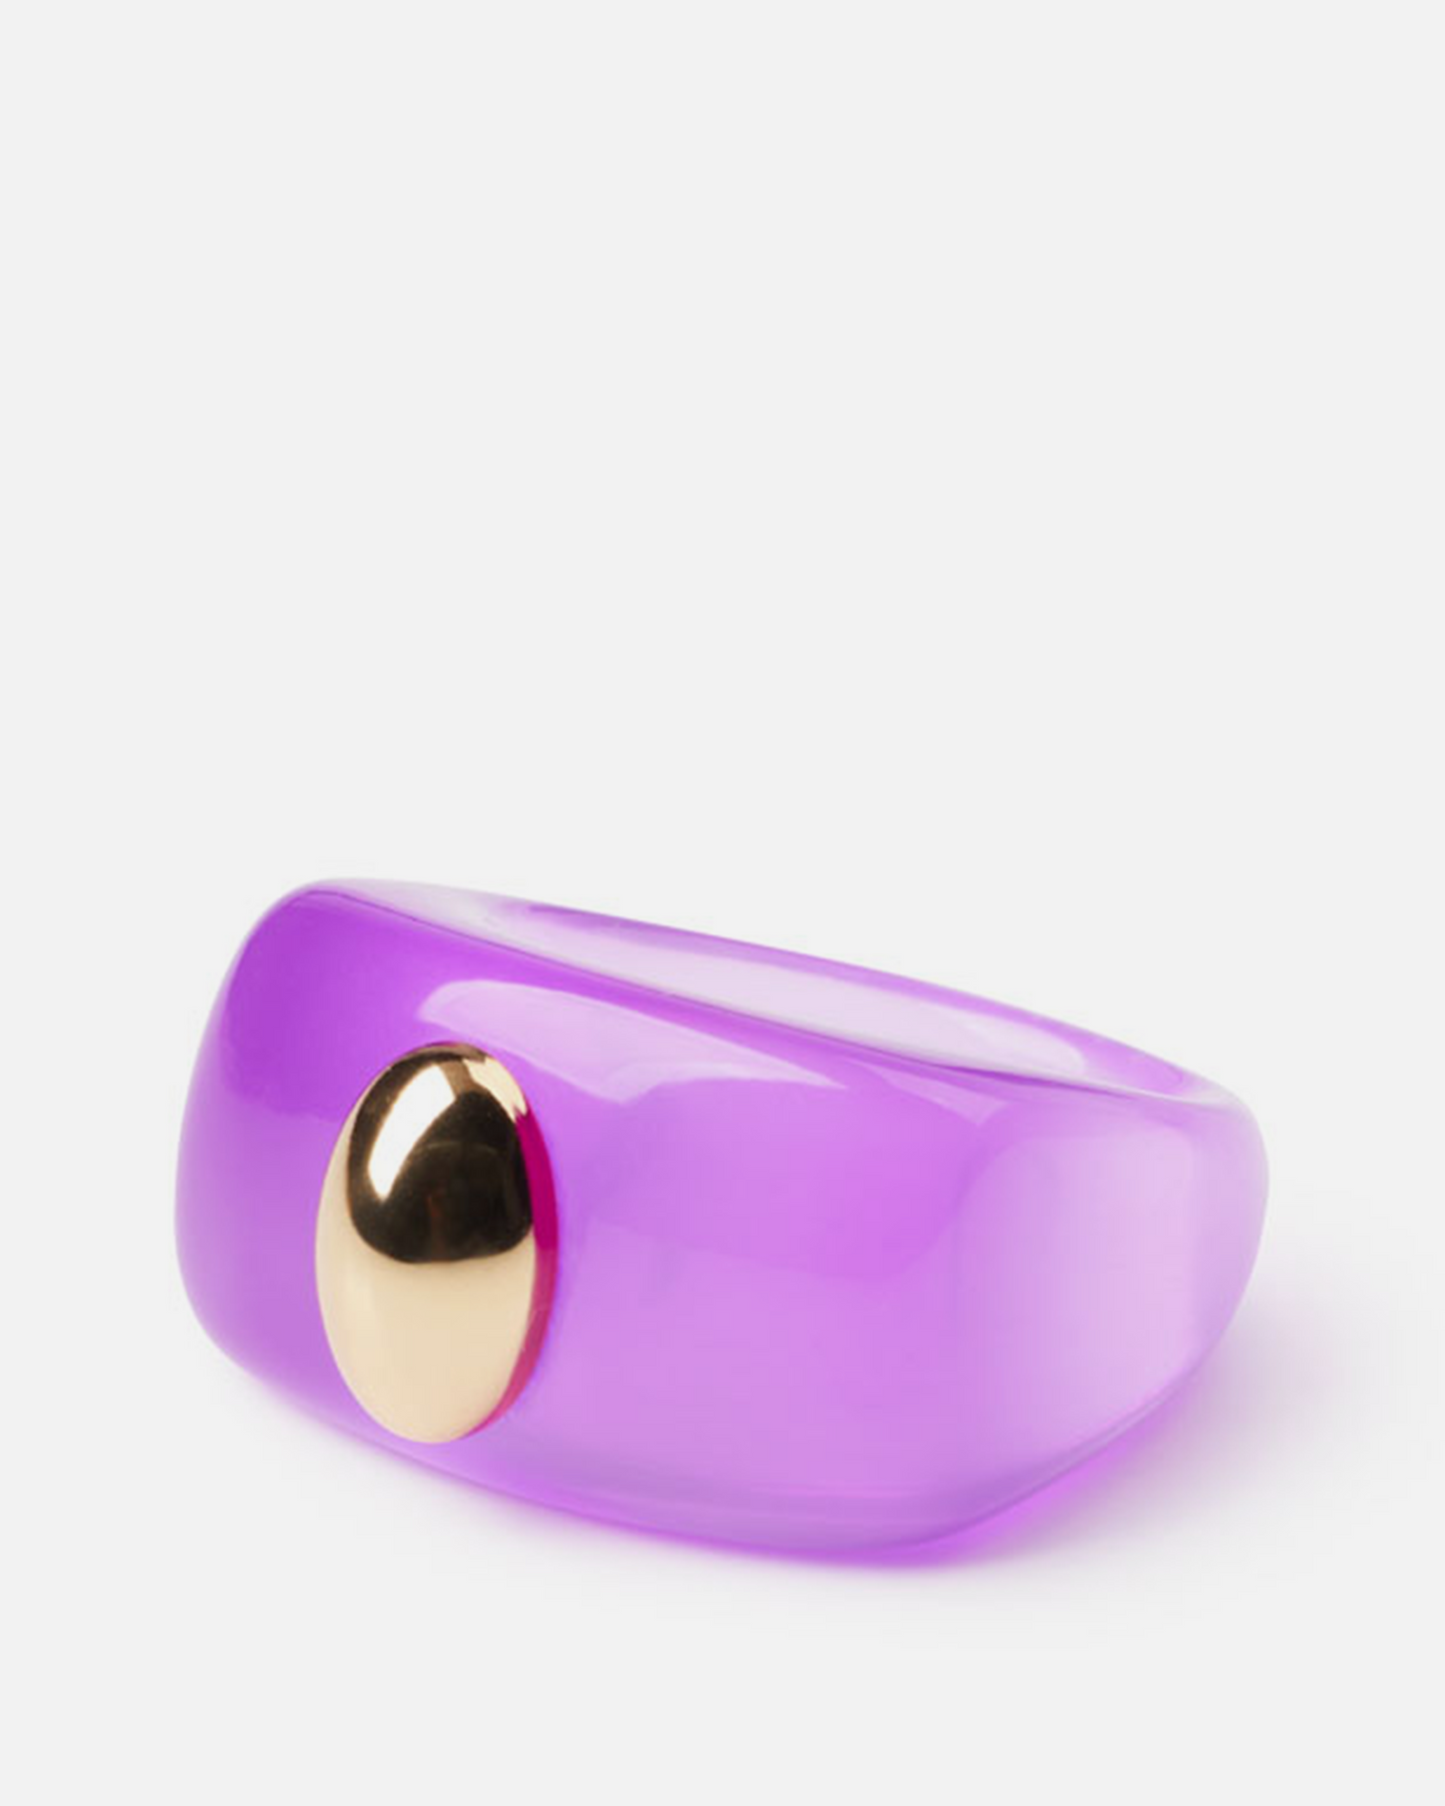 La Manso Jewelry Esmeralda Ring in Purple